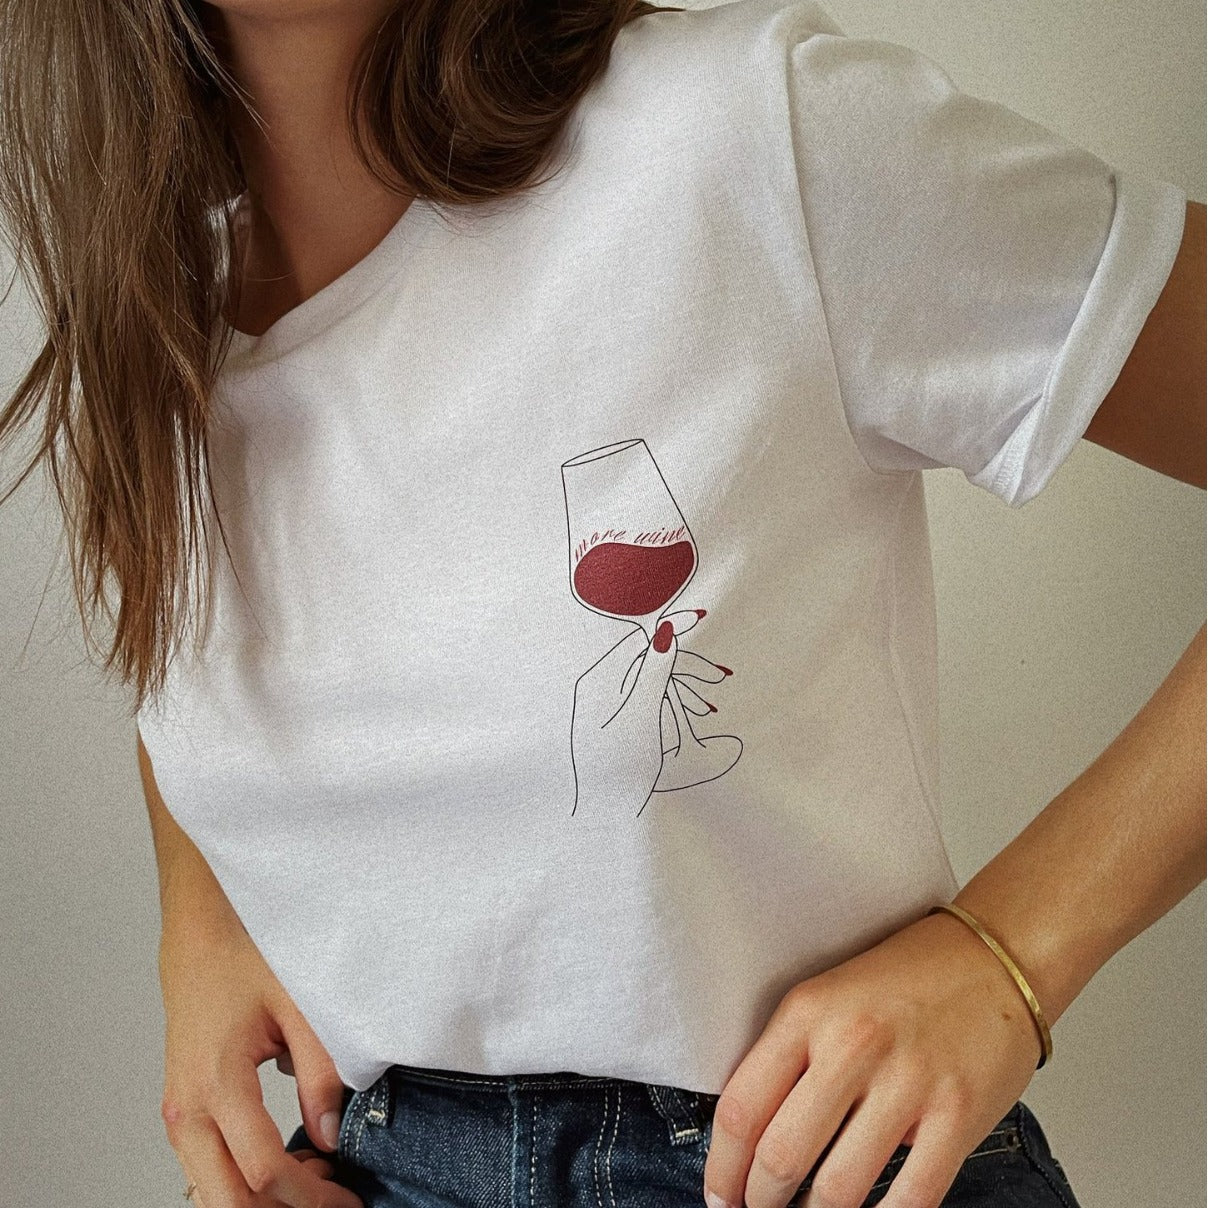 Loose Cotton Fashion Printed Short-sleeved T-shirt Women's Design Round Neck Top Fashion